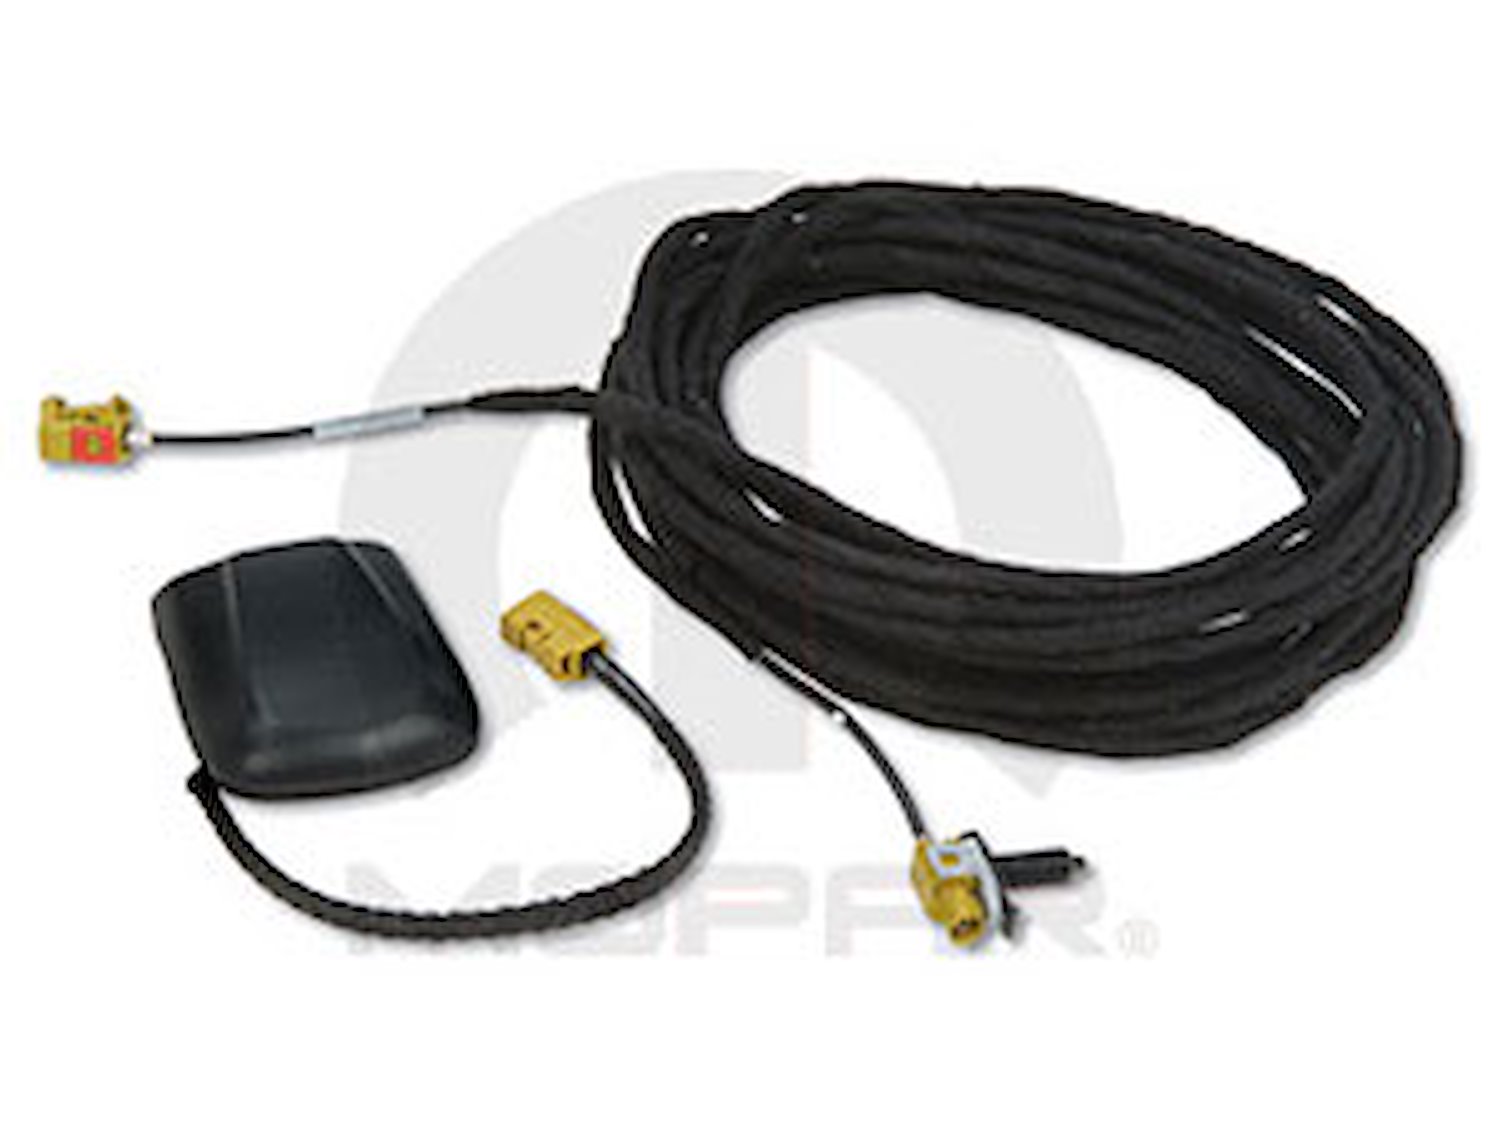 Sirius Satellite Antenna Kit Chrysler/Dodge/Jeep Includes: